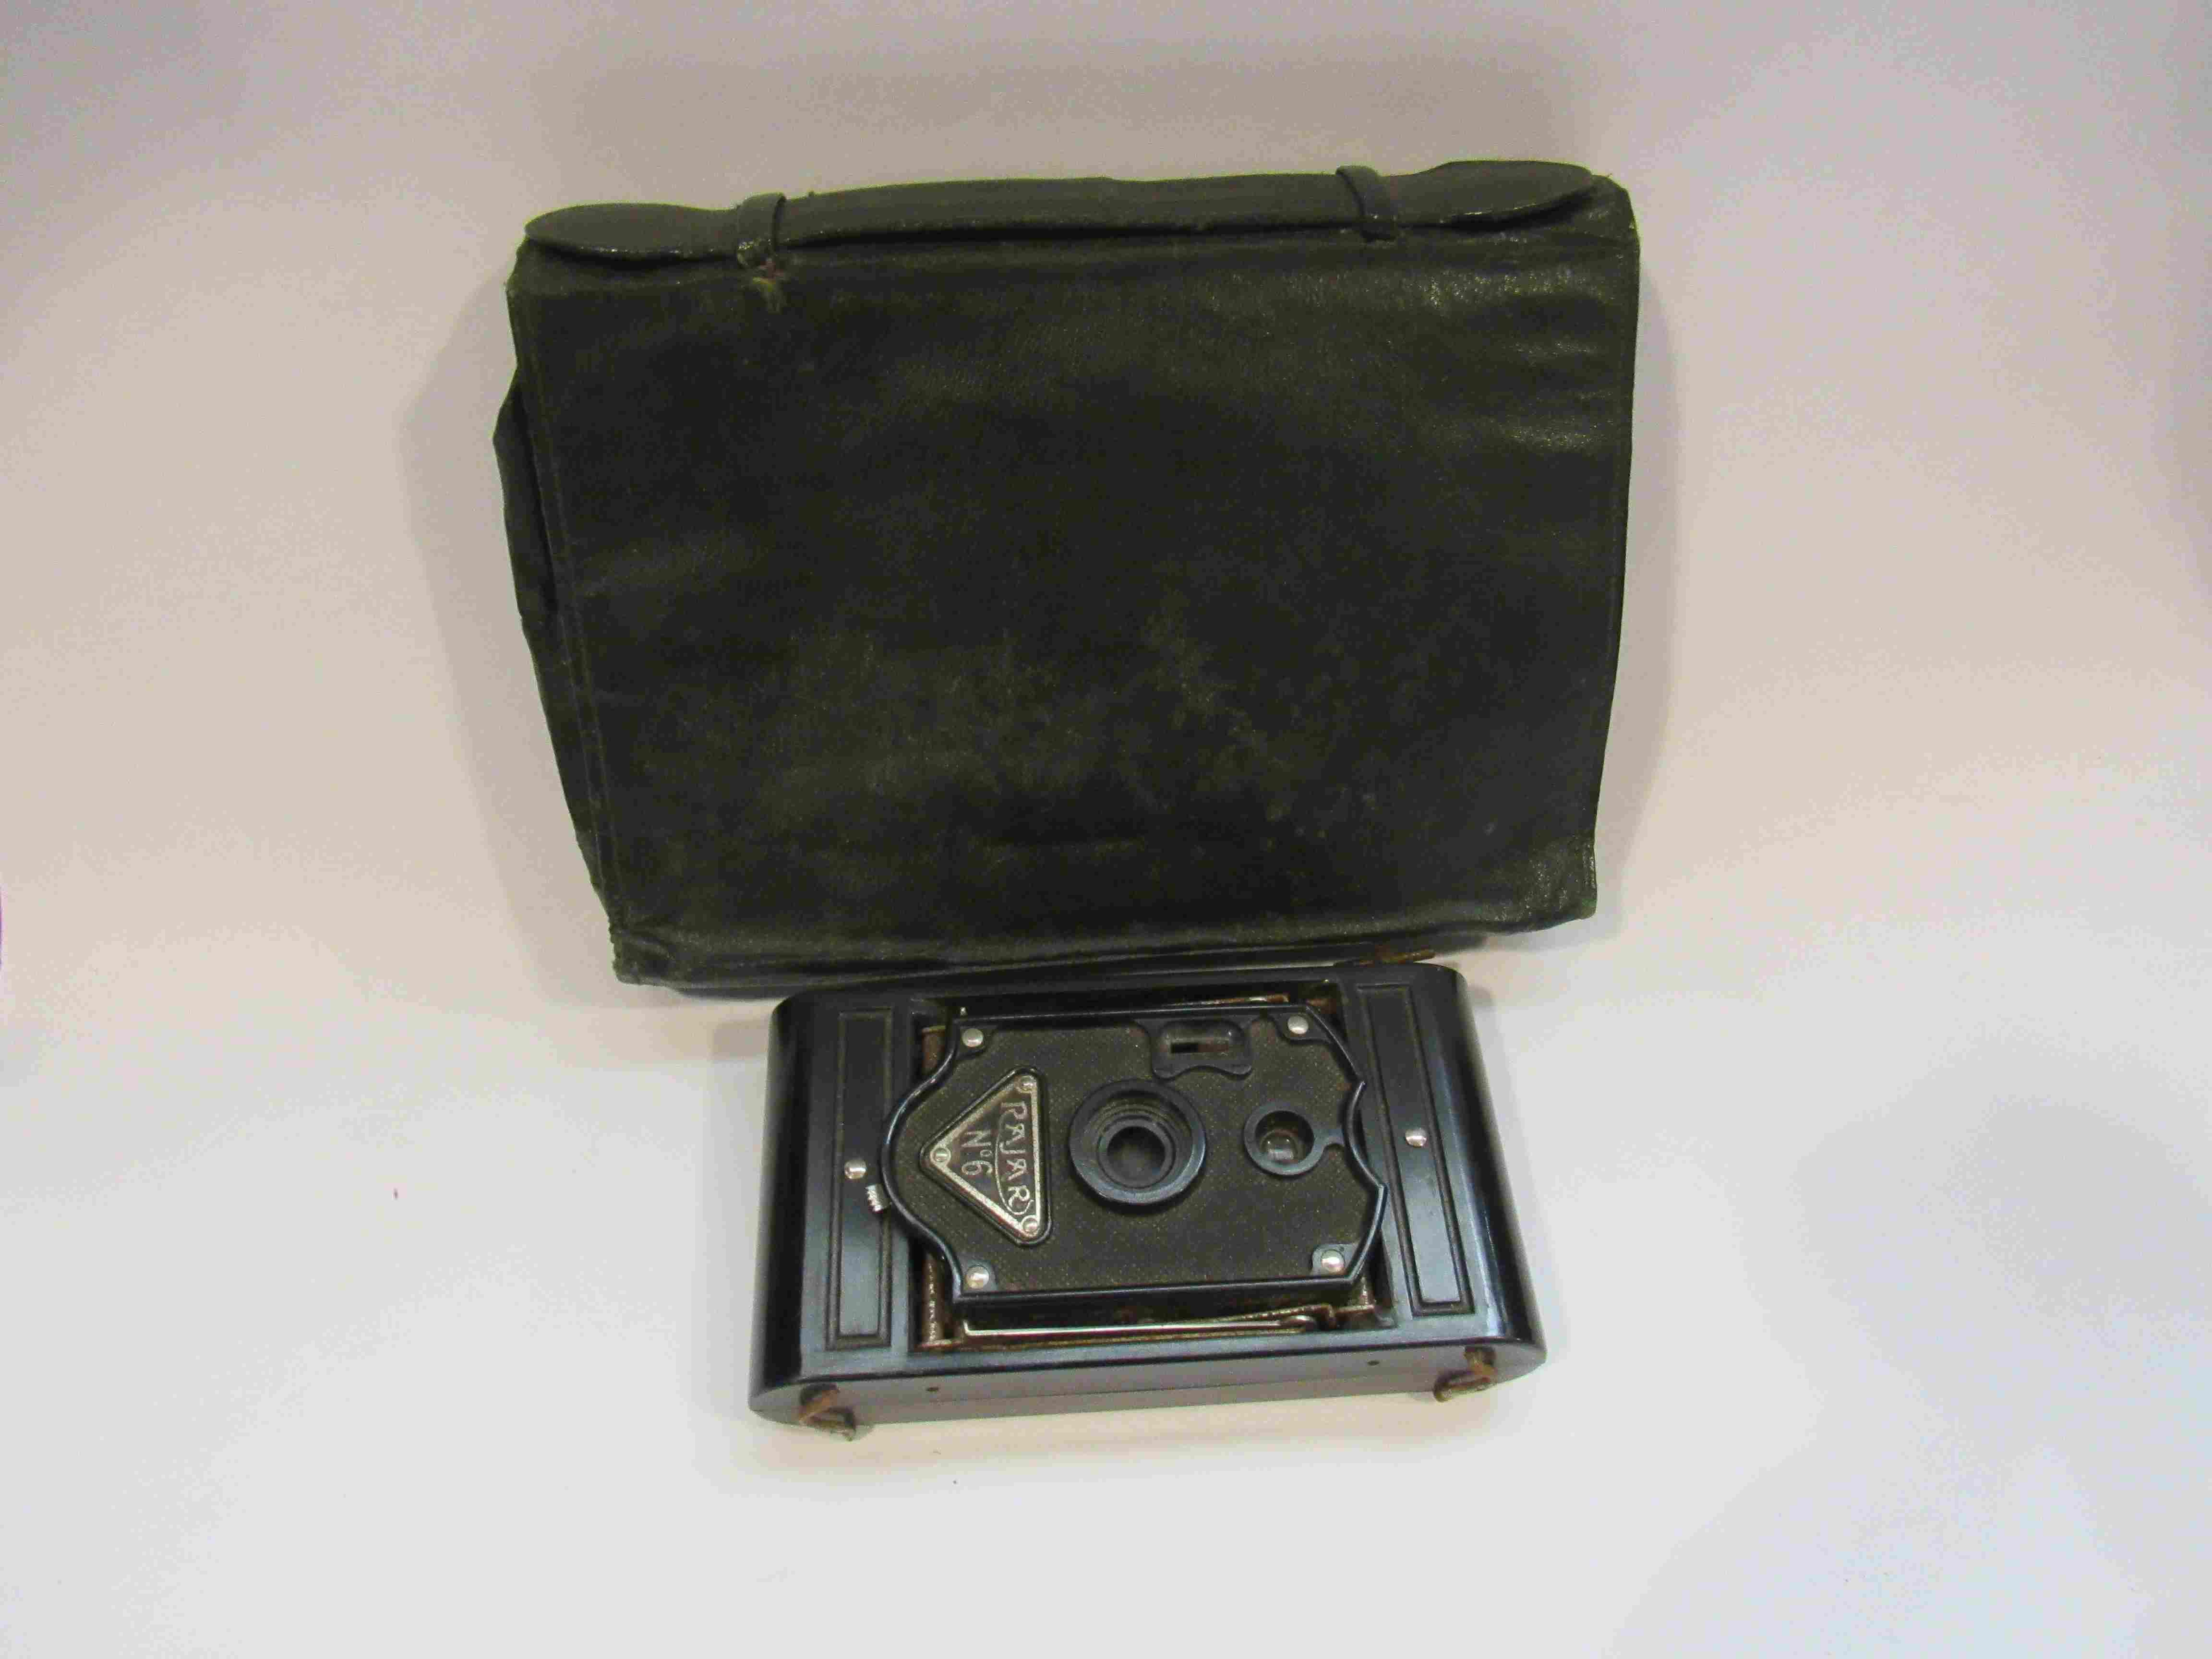 A leather clutch bag and a Rajar camera